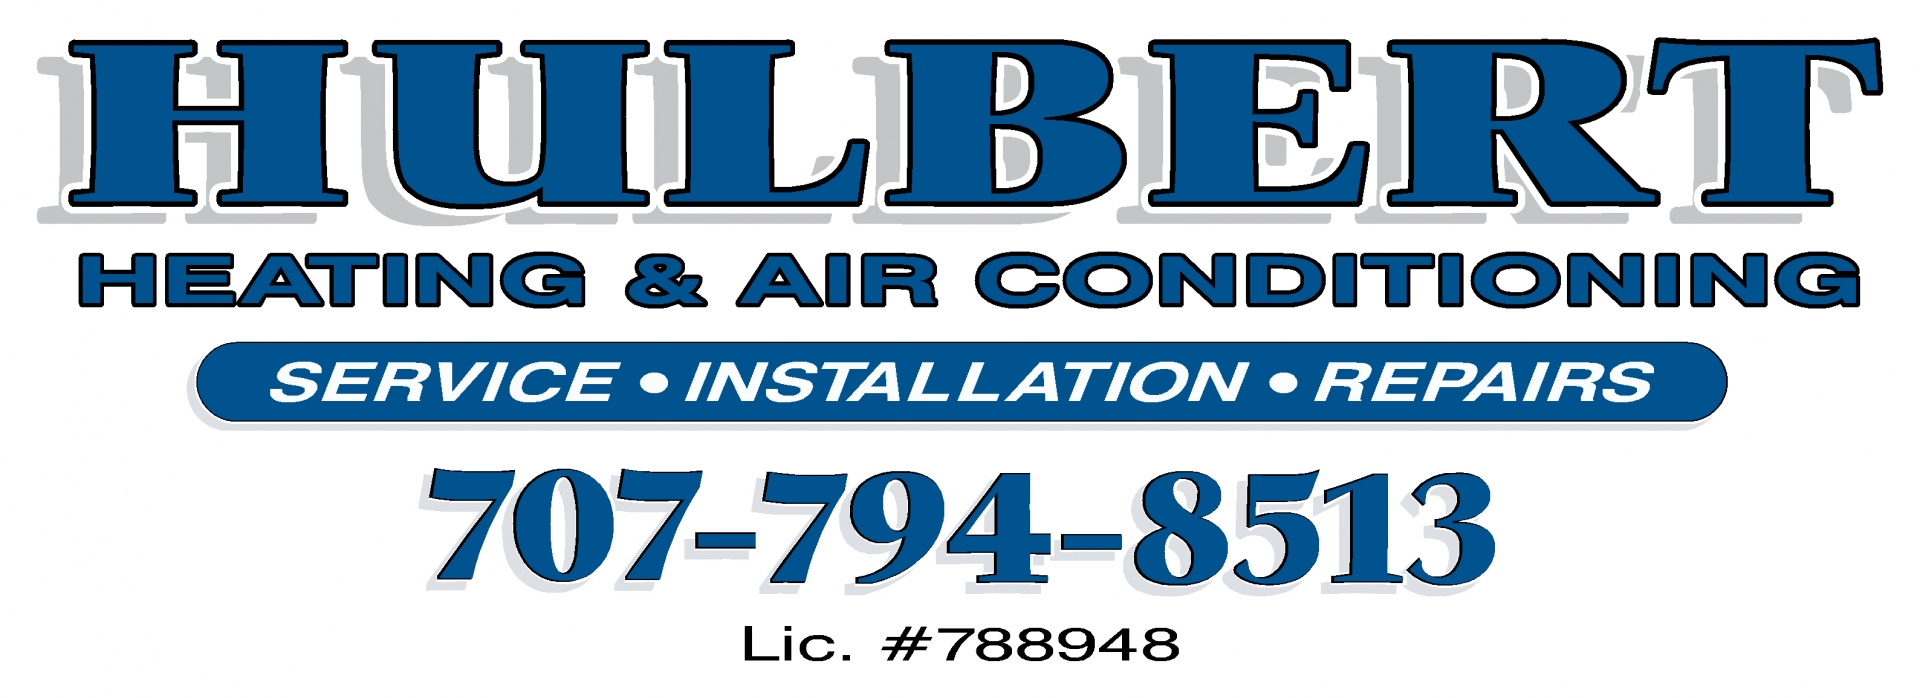 Hulbert Heating & Air Conditioning Inc. company logo